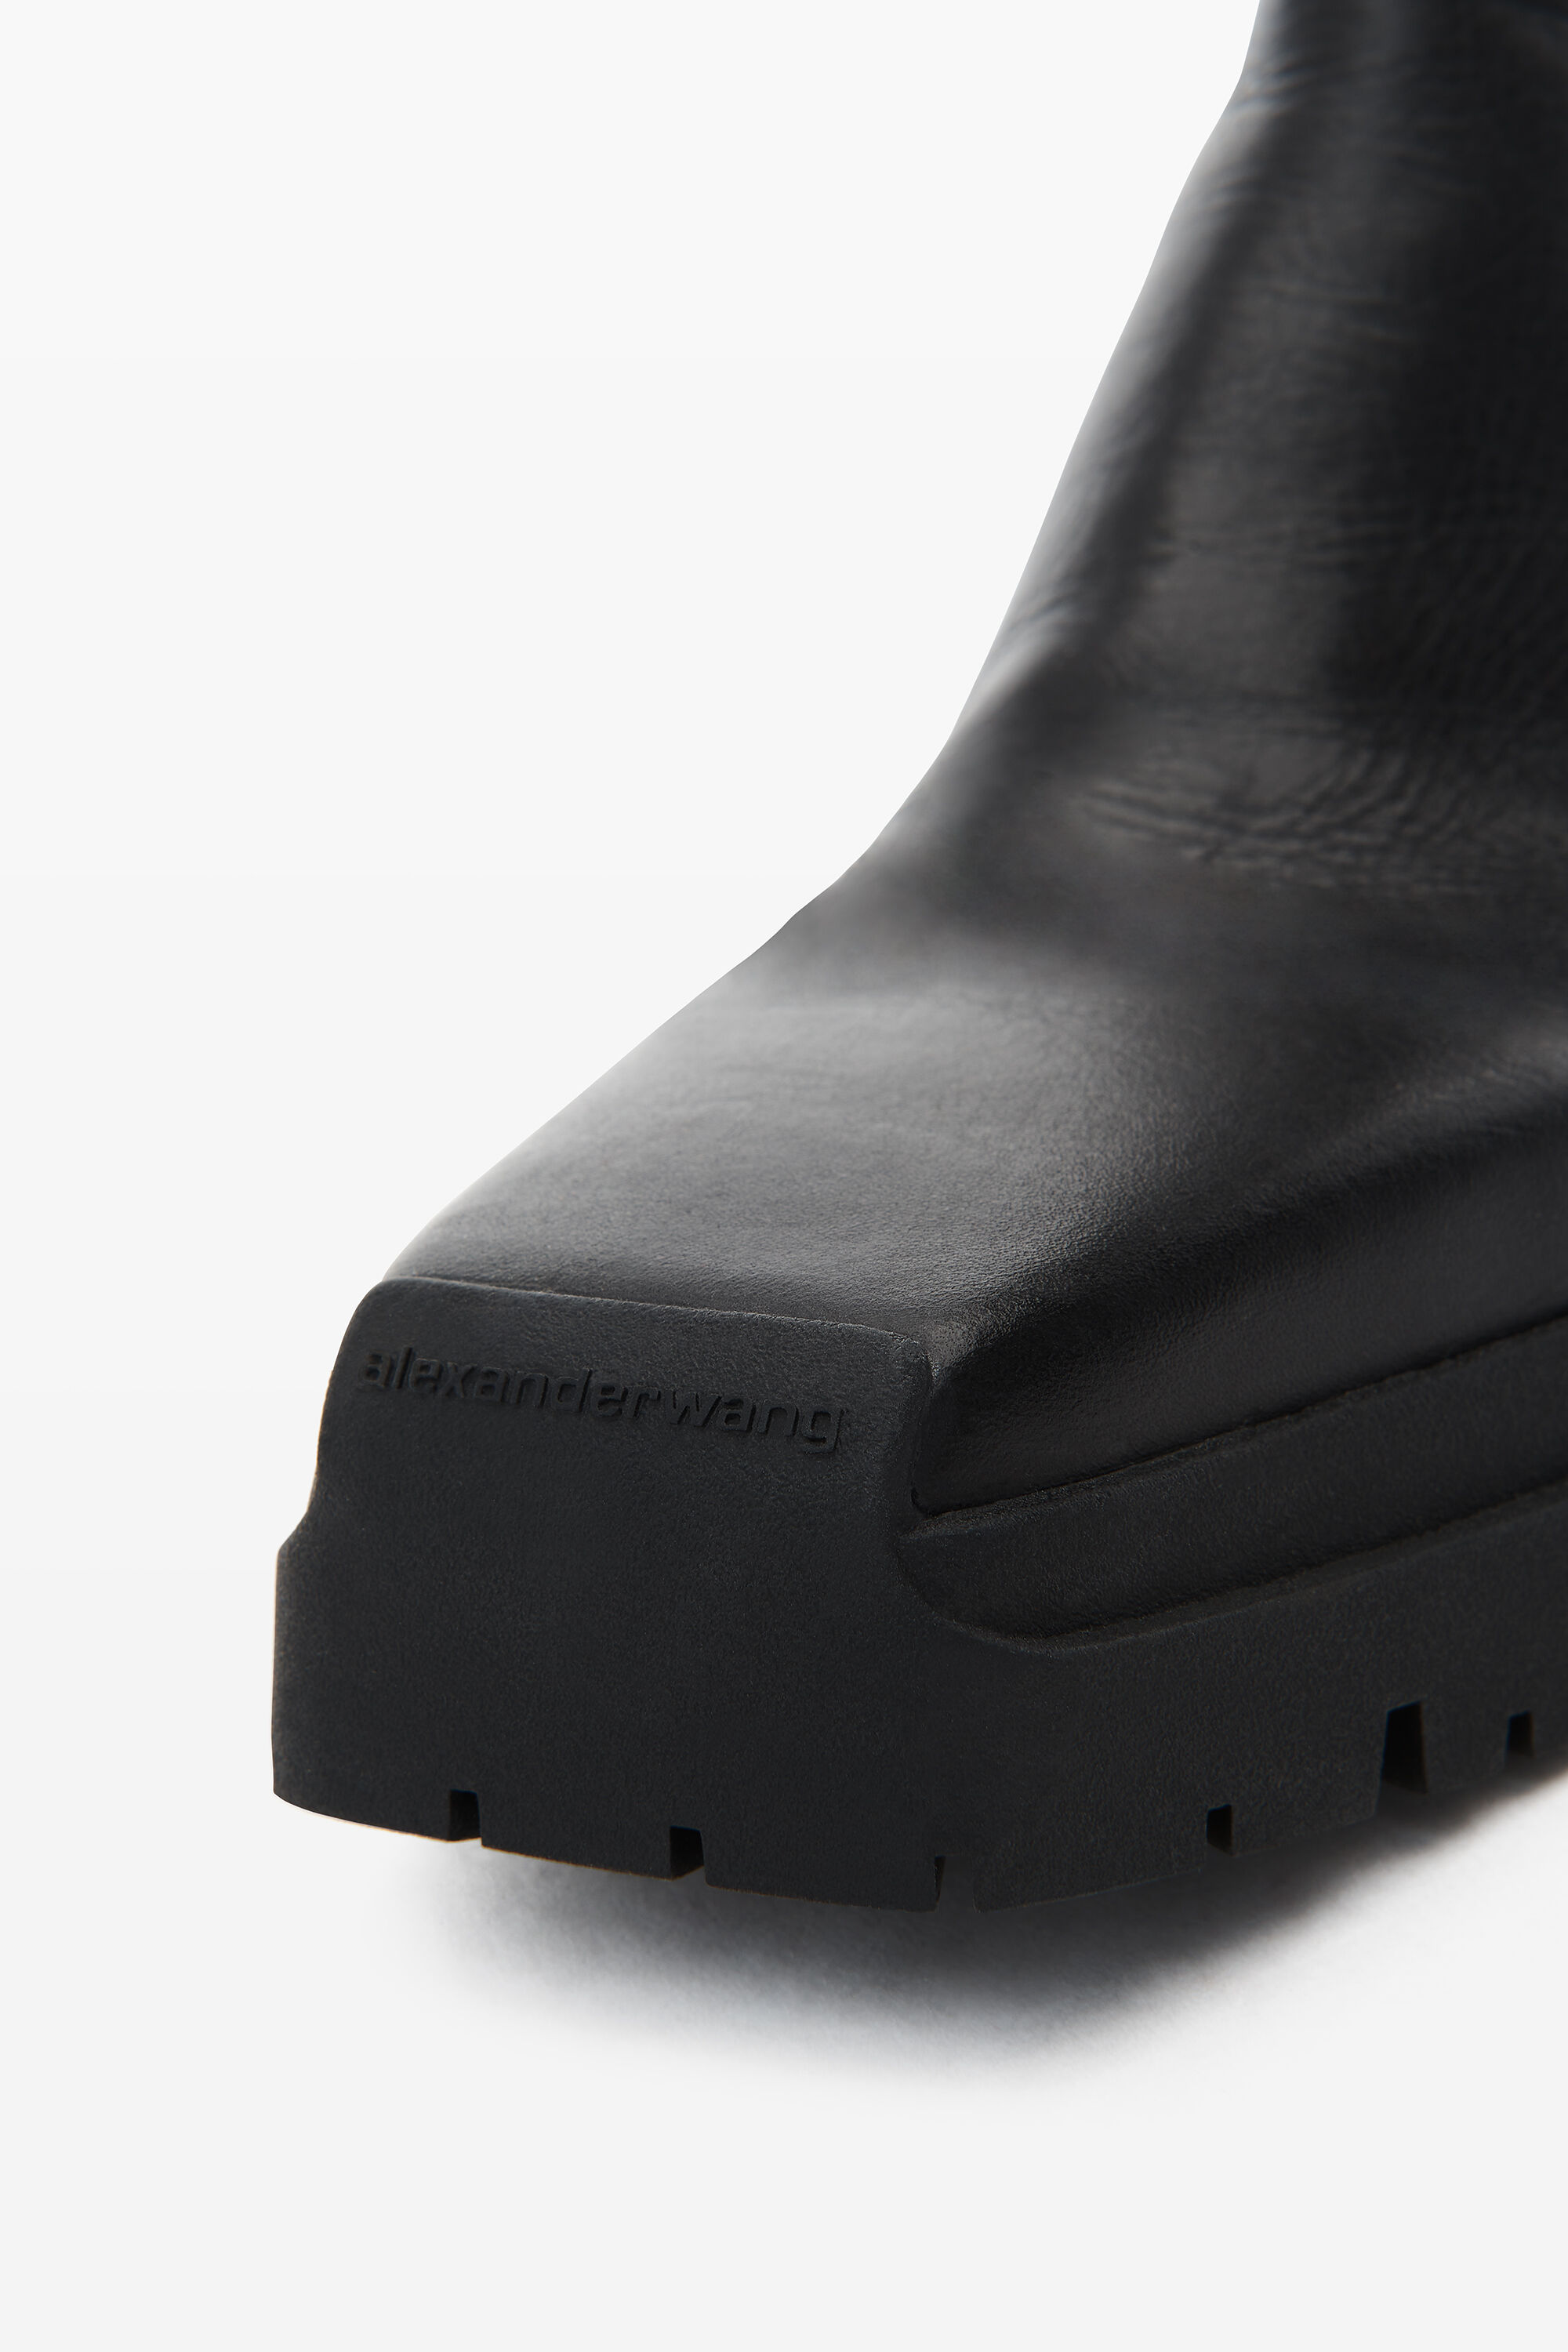 terrain crackle patent leather moto boot in BLACK | heel height 